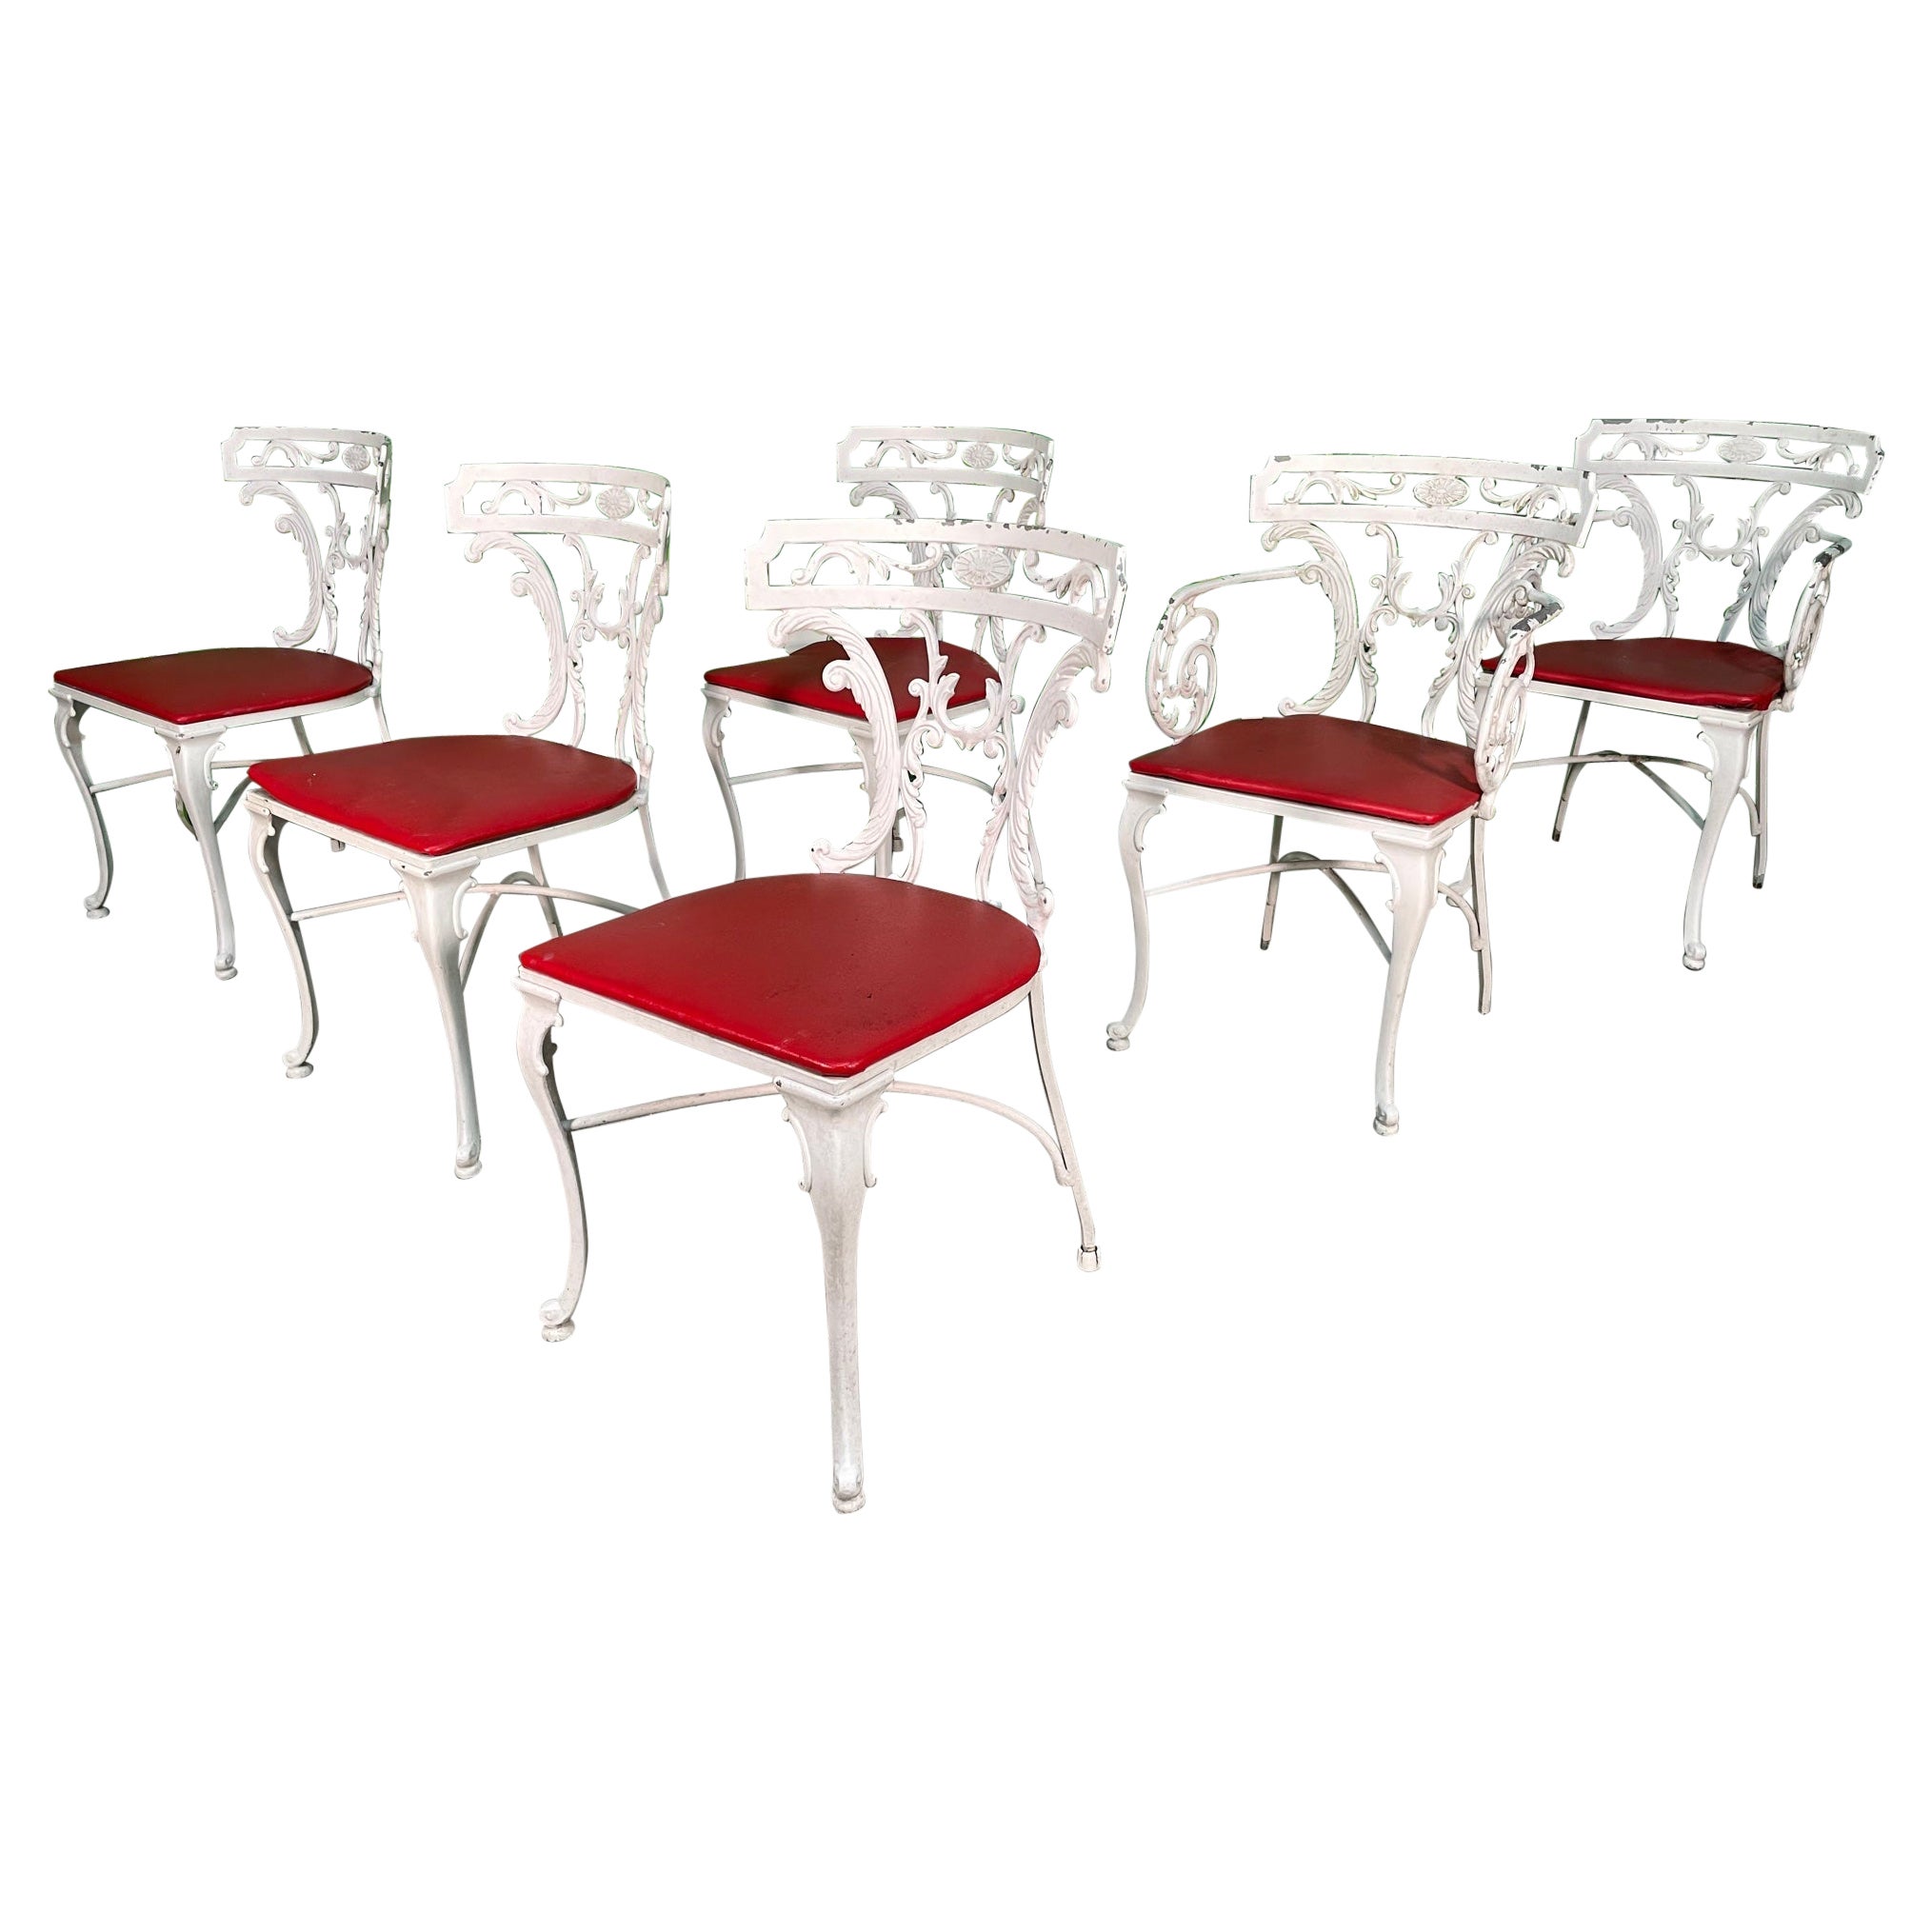 Klismos Garden Chairs 1950s Cast Aluminum, Set of 6